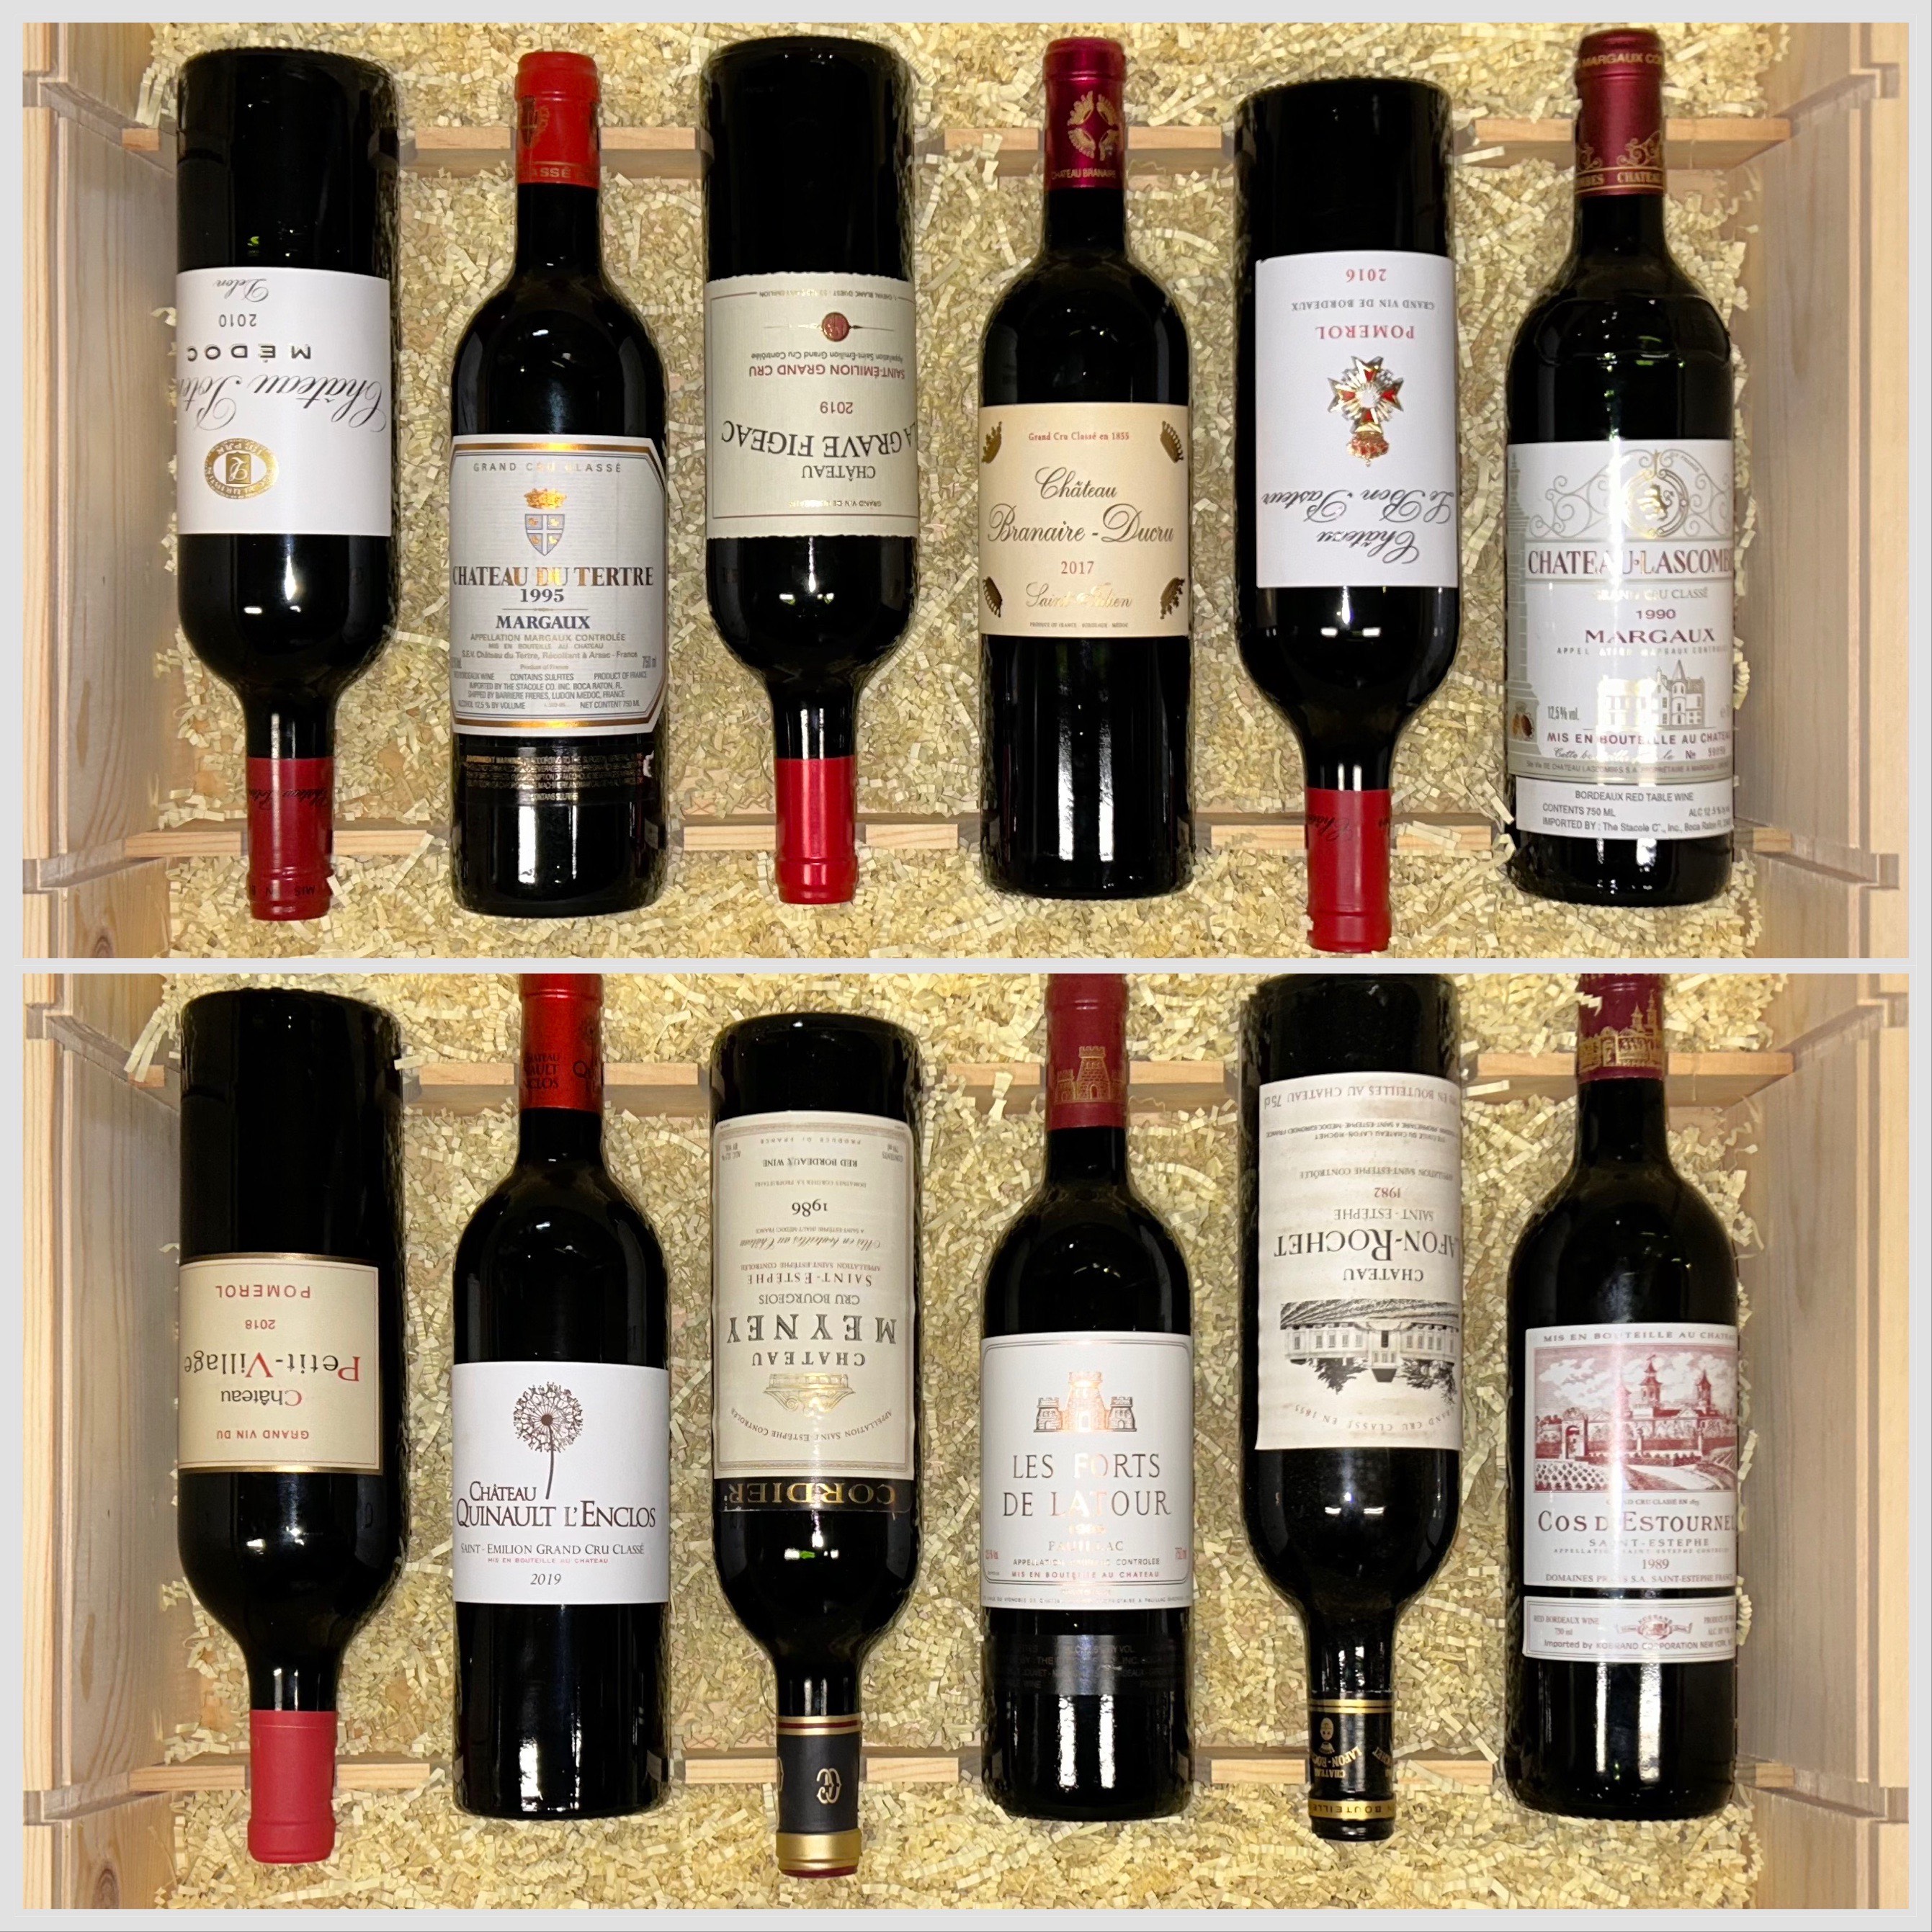 Bordeaux Lovers 12 Bottle Case #23A3 - click for full details